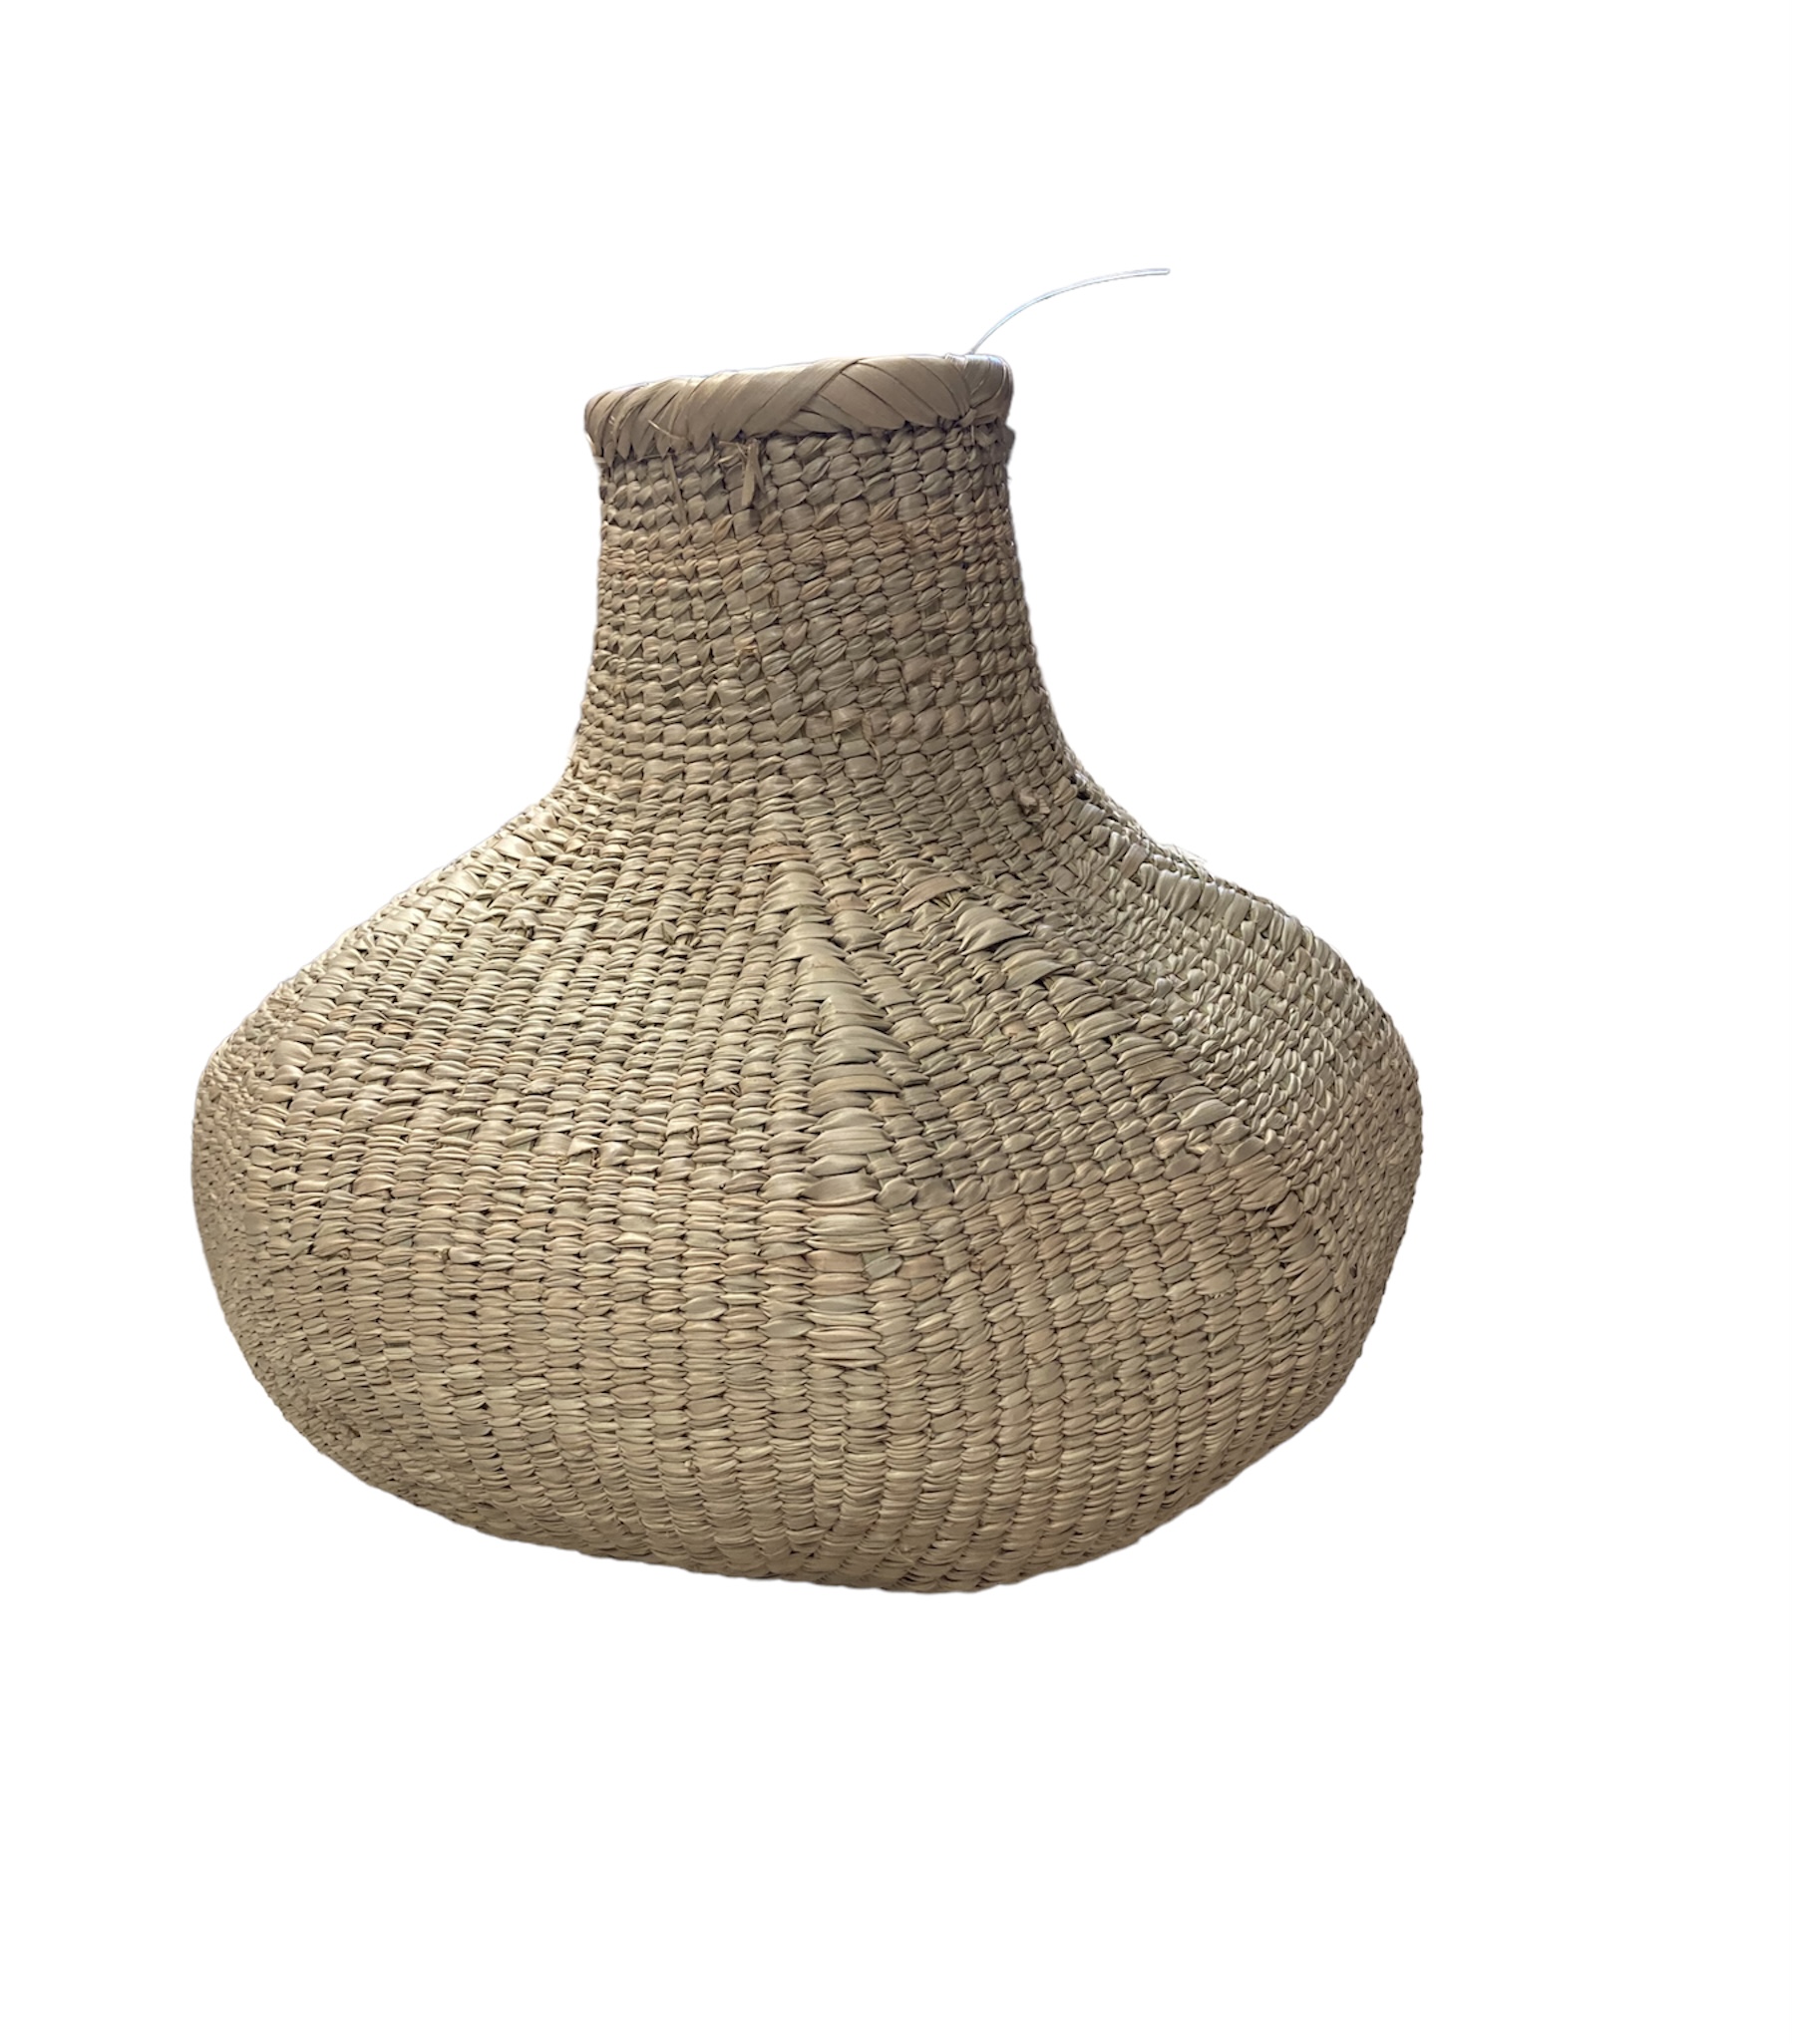 Garlic Gourd Basket from Zimbabwe : 9" - 12" in height